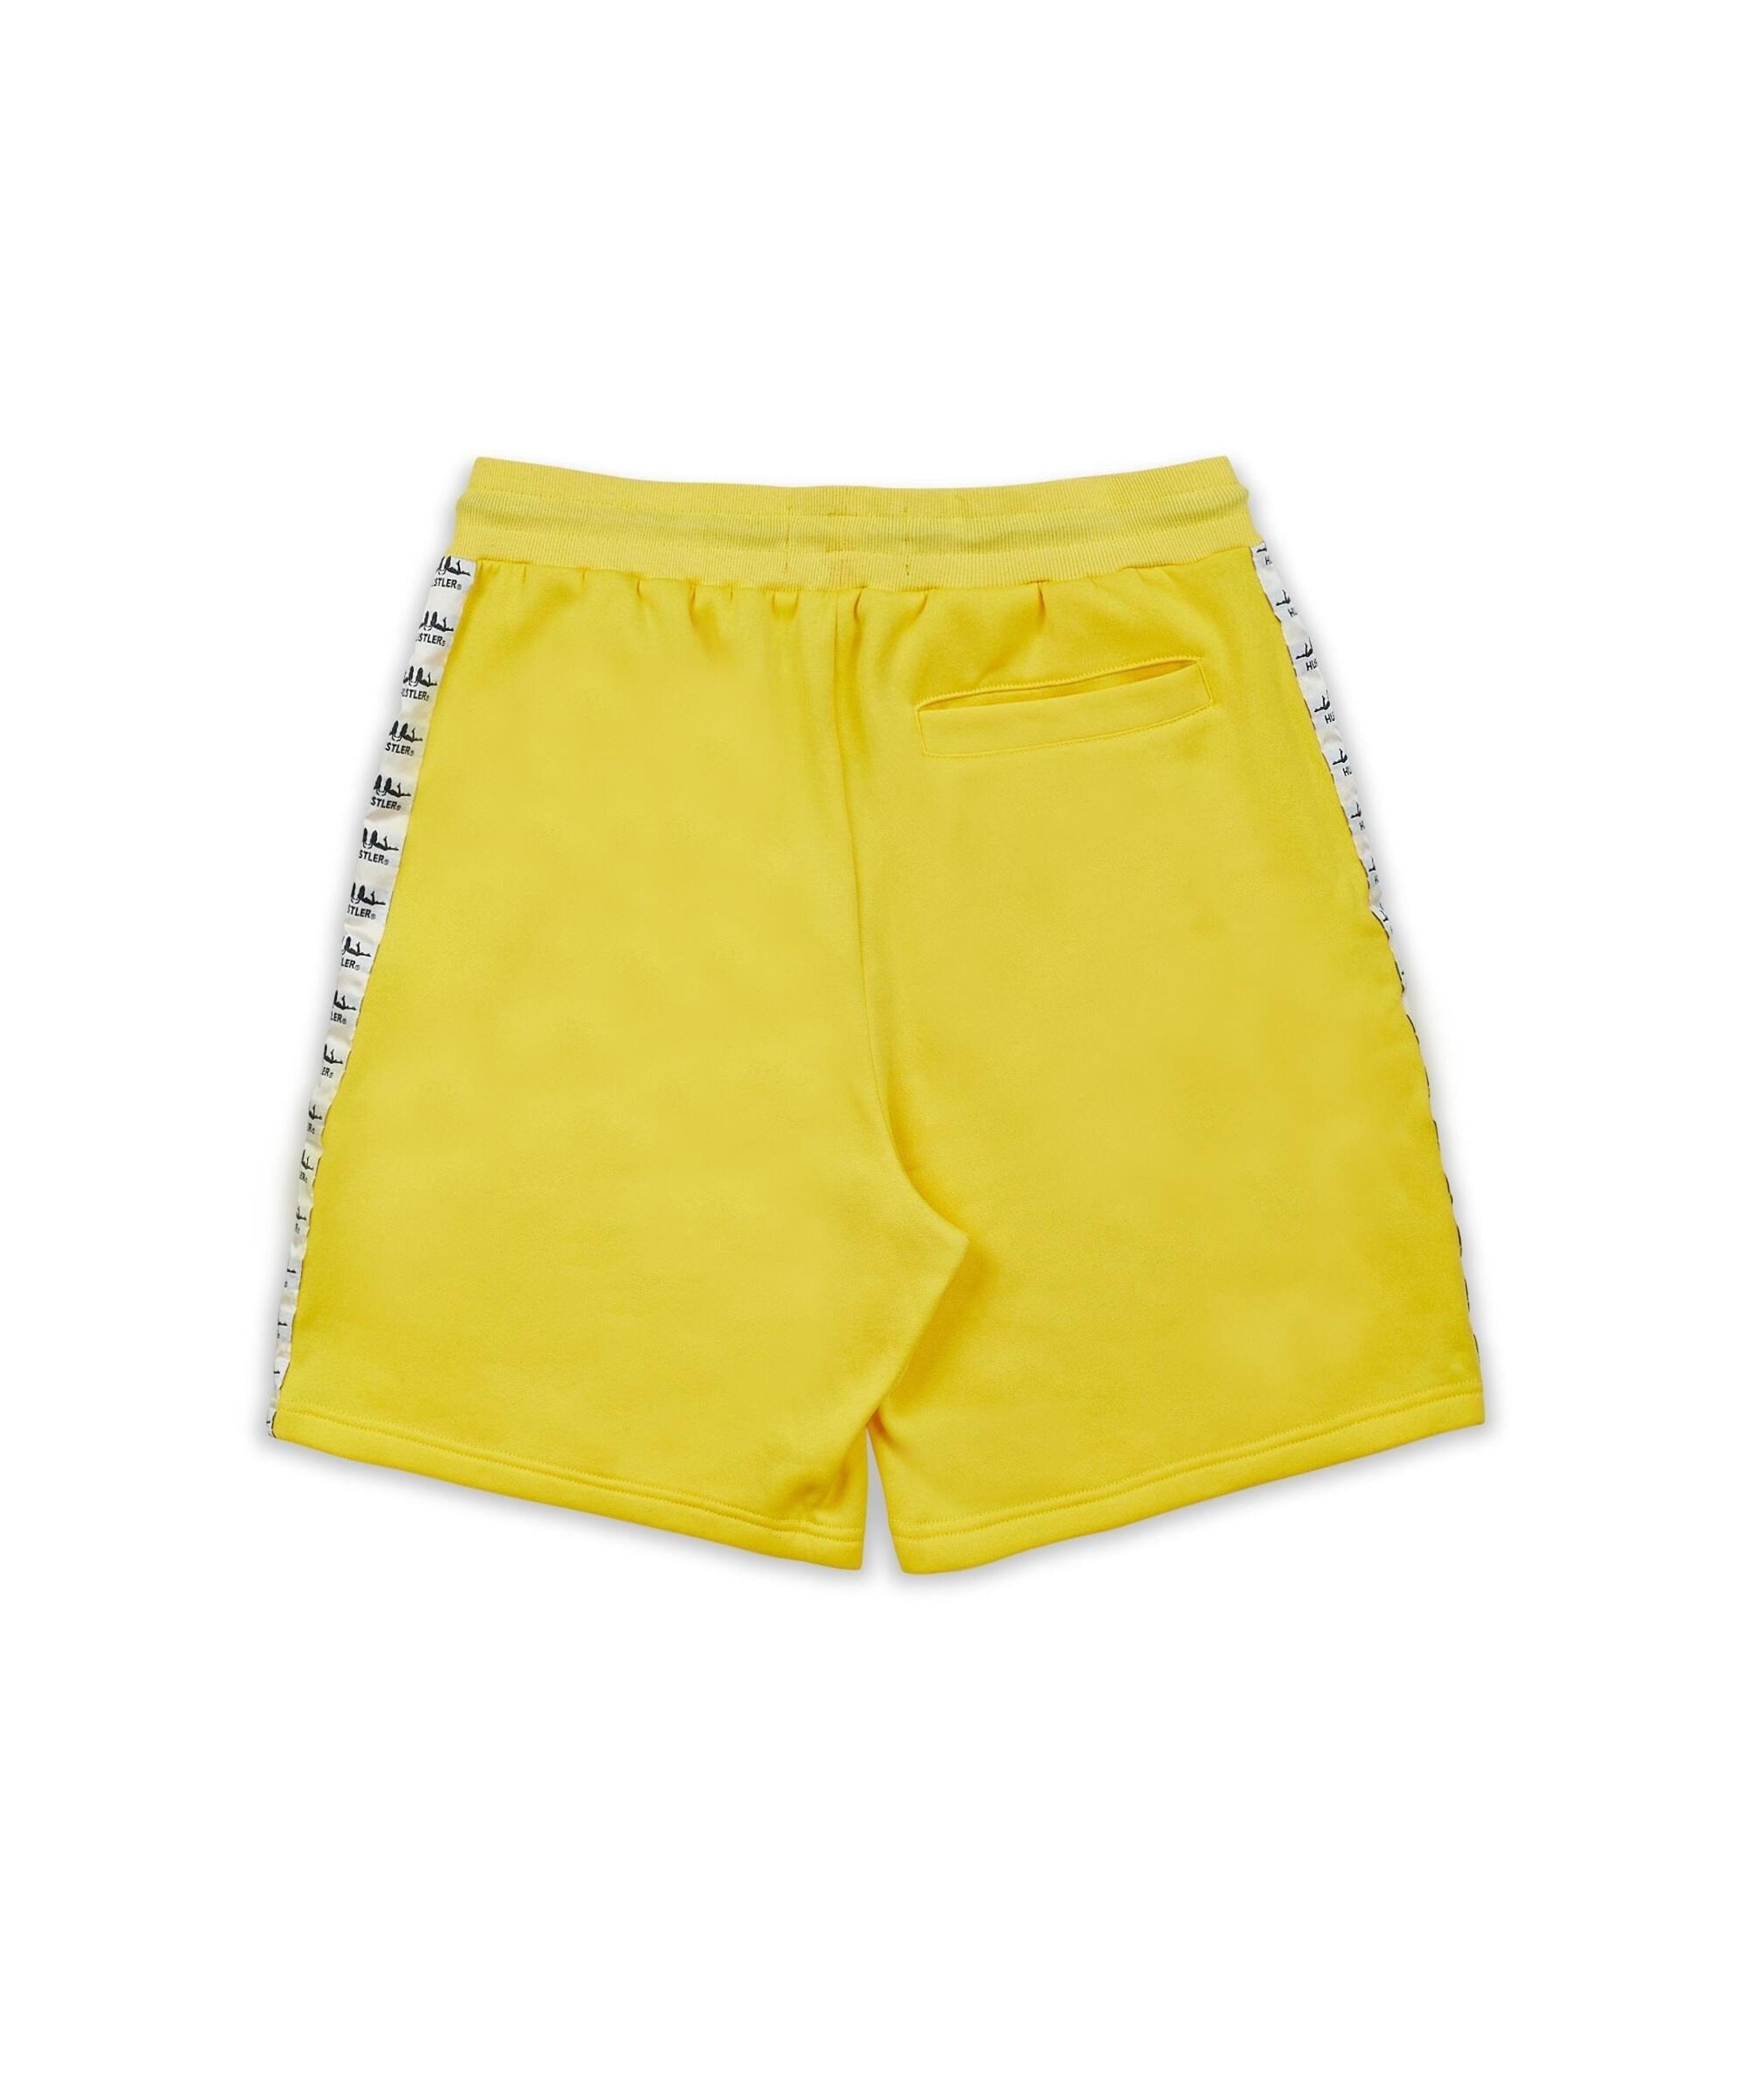 Alternate View 2 of Hustler Side Stripe Shorts - Yellow